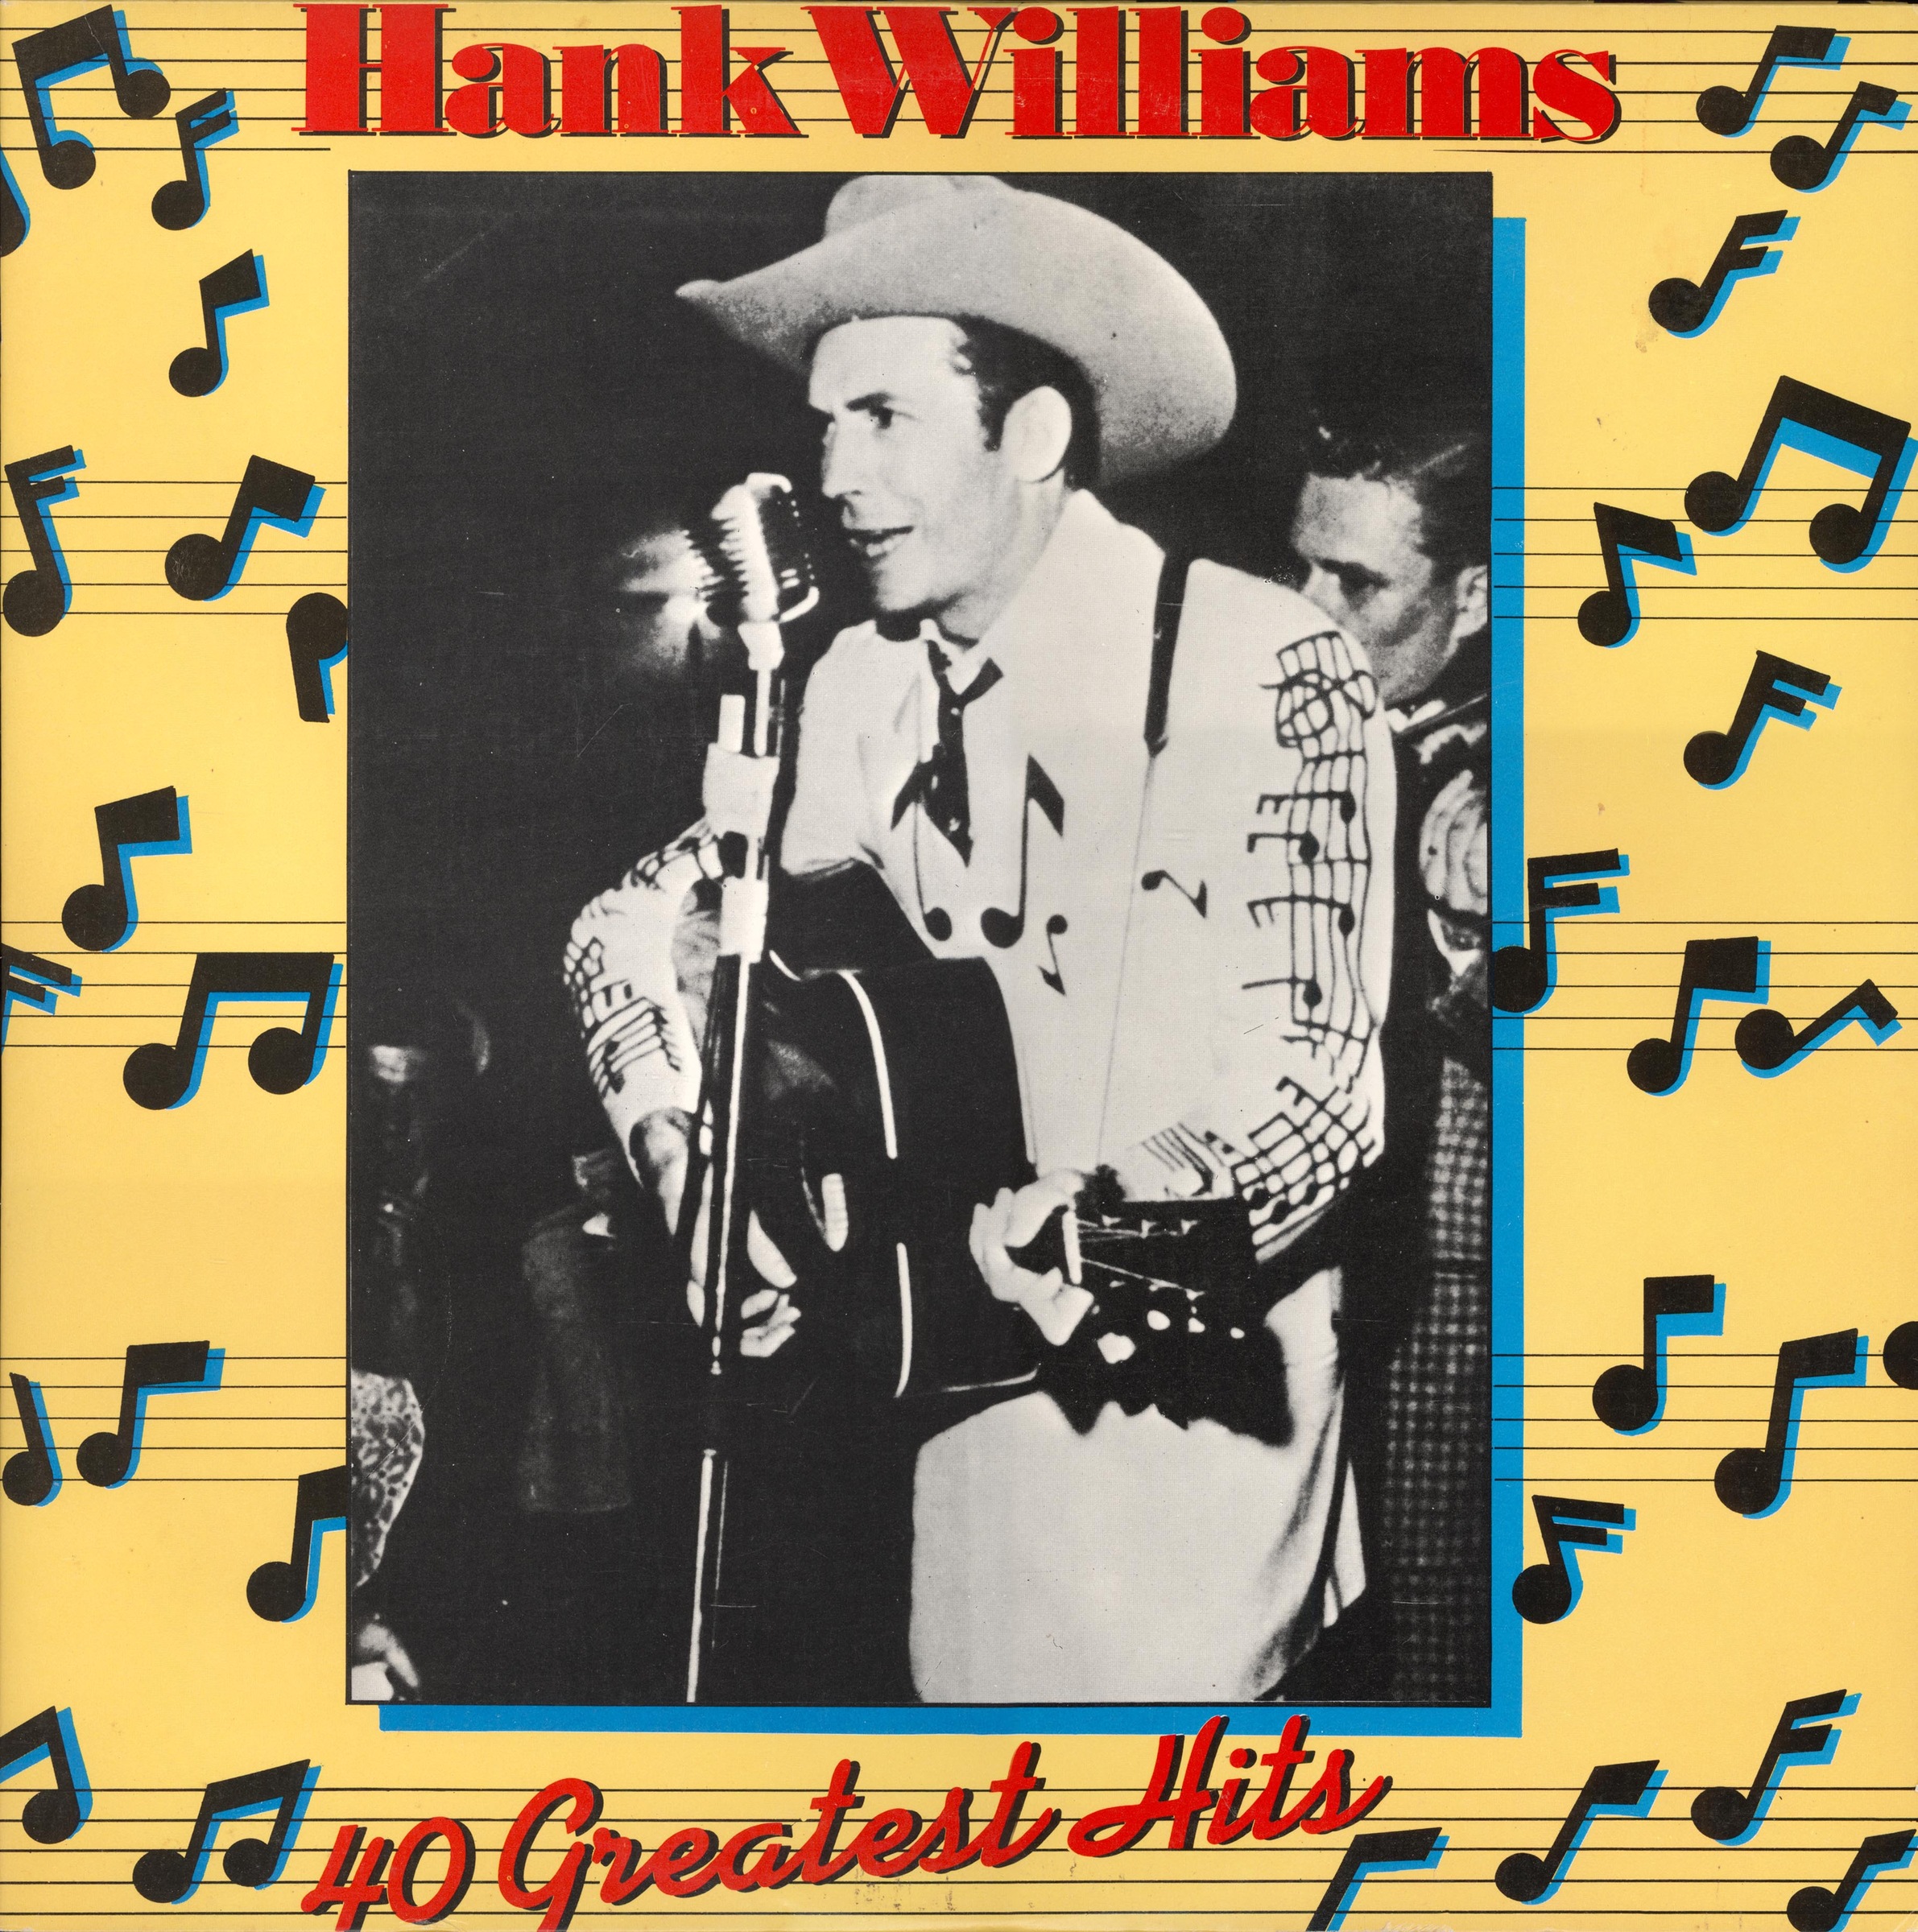 Hank Williams 40 Greatest Hits cover artwork